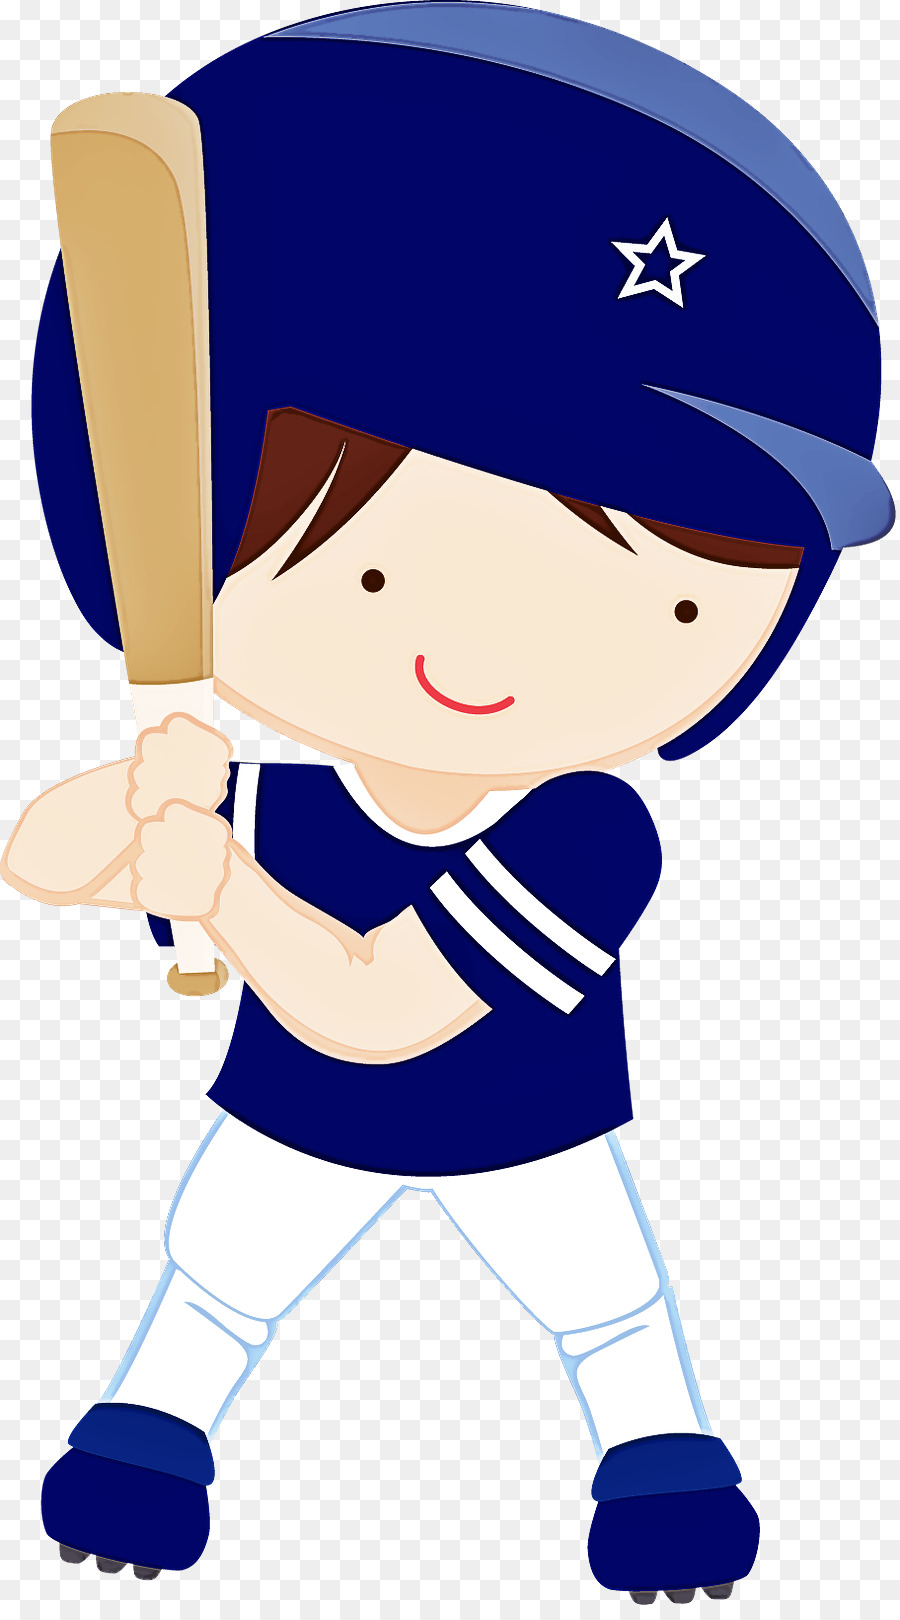 cartoon baseball bat baseball player baseball equipment solid swing+hit